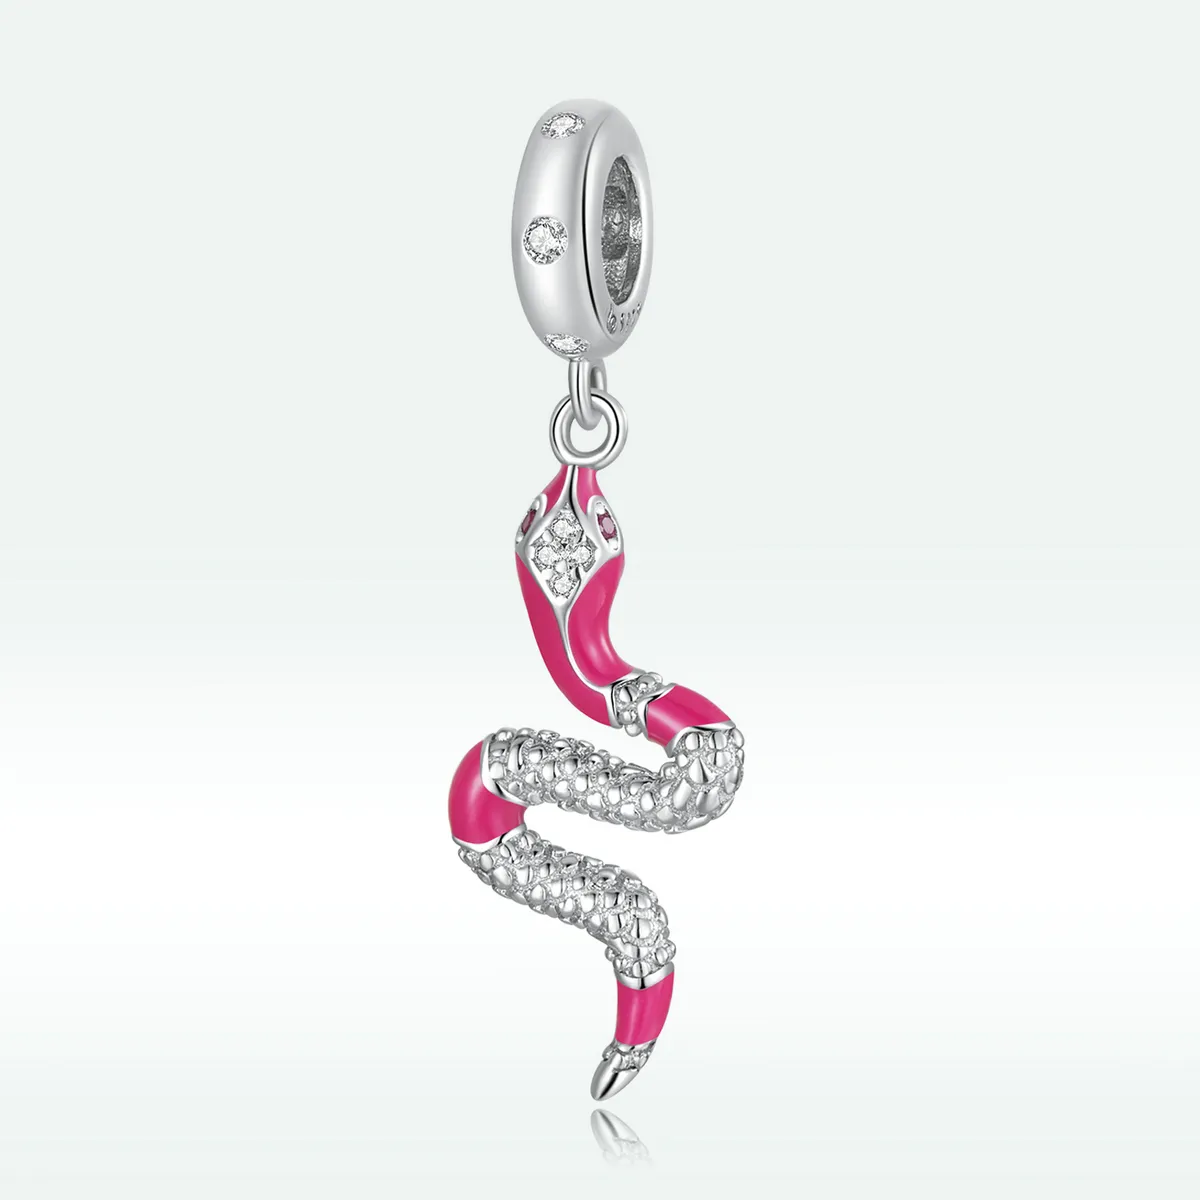 Cercei pandantiv în stil Pandora, model Delicate Spirit Serpent - BSC577